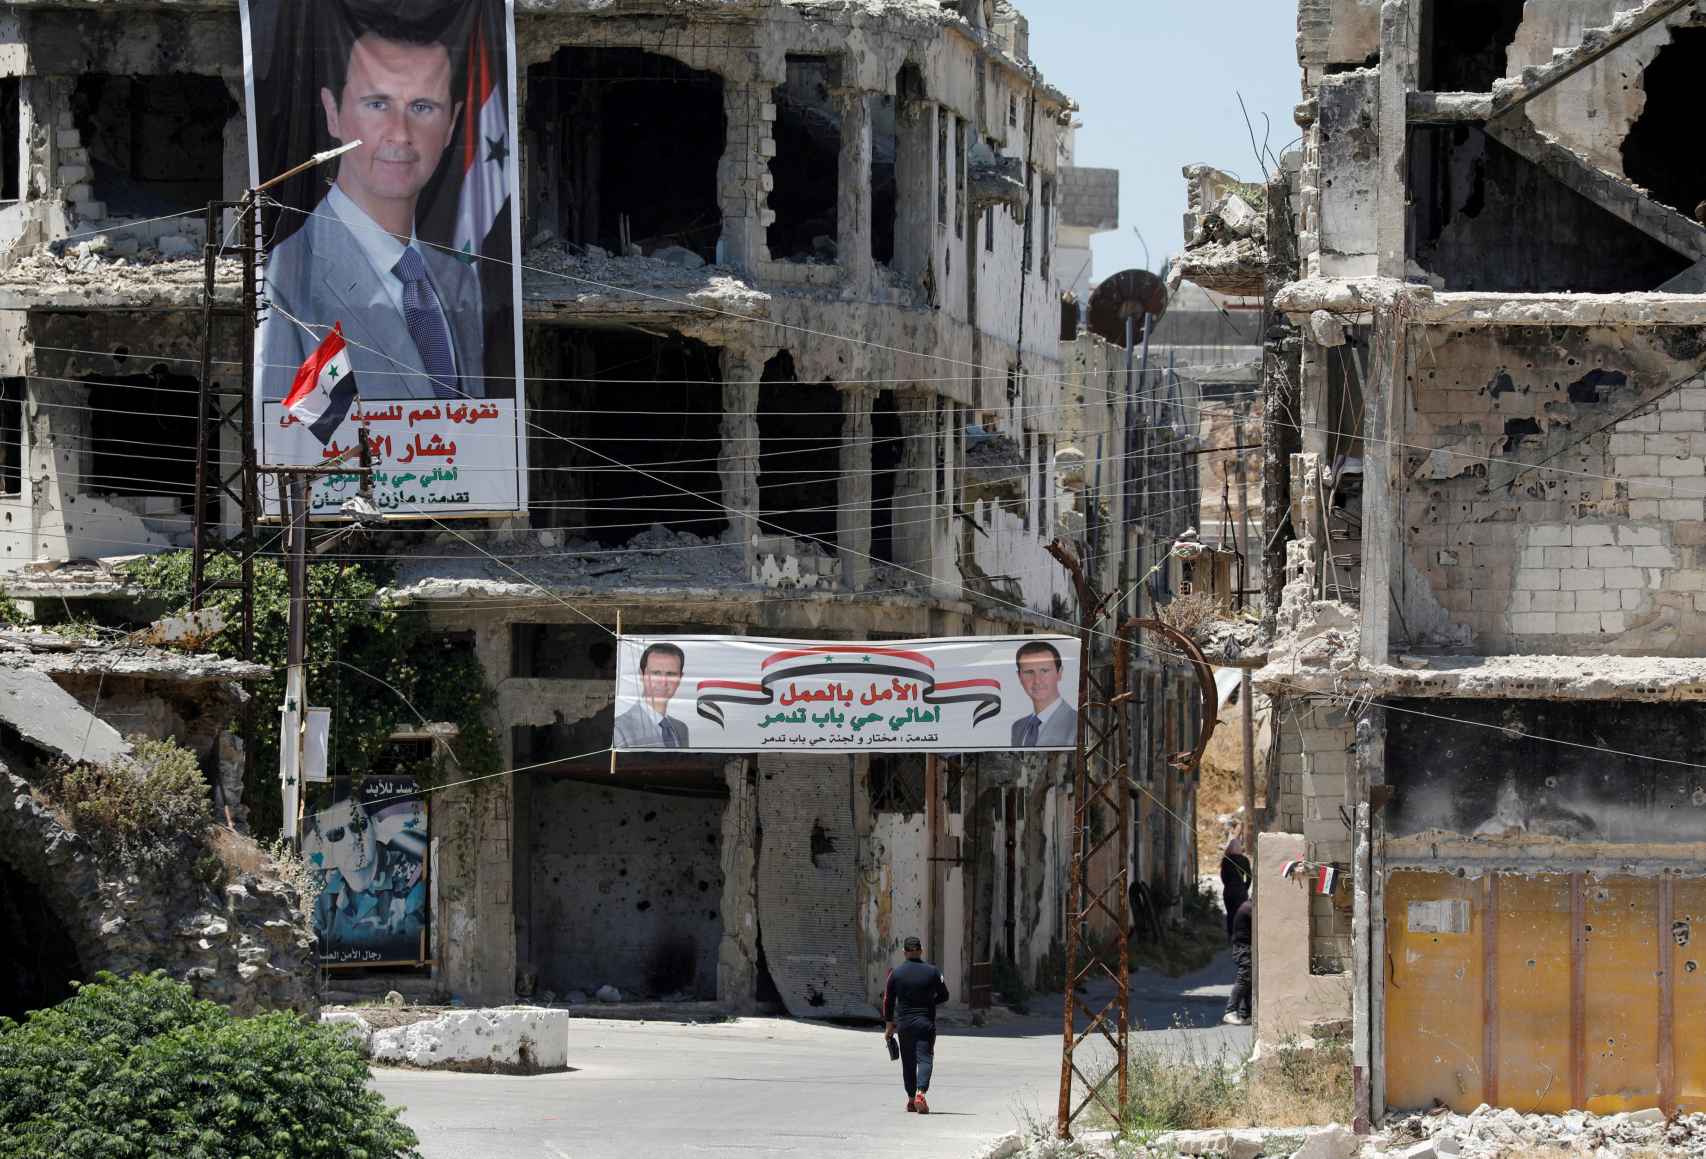 Un hombre pasa junto a pancartas que representan al presidente de Siria, Bashar al-Assad, cerca de edificios dañados, antes de las elecciones presidenciales del 26 de mayo, en Homs, Siria, el 23 de mayo de 2021.